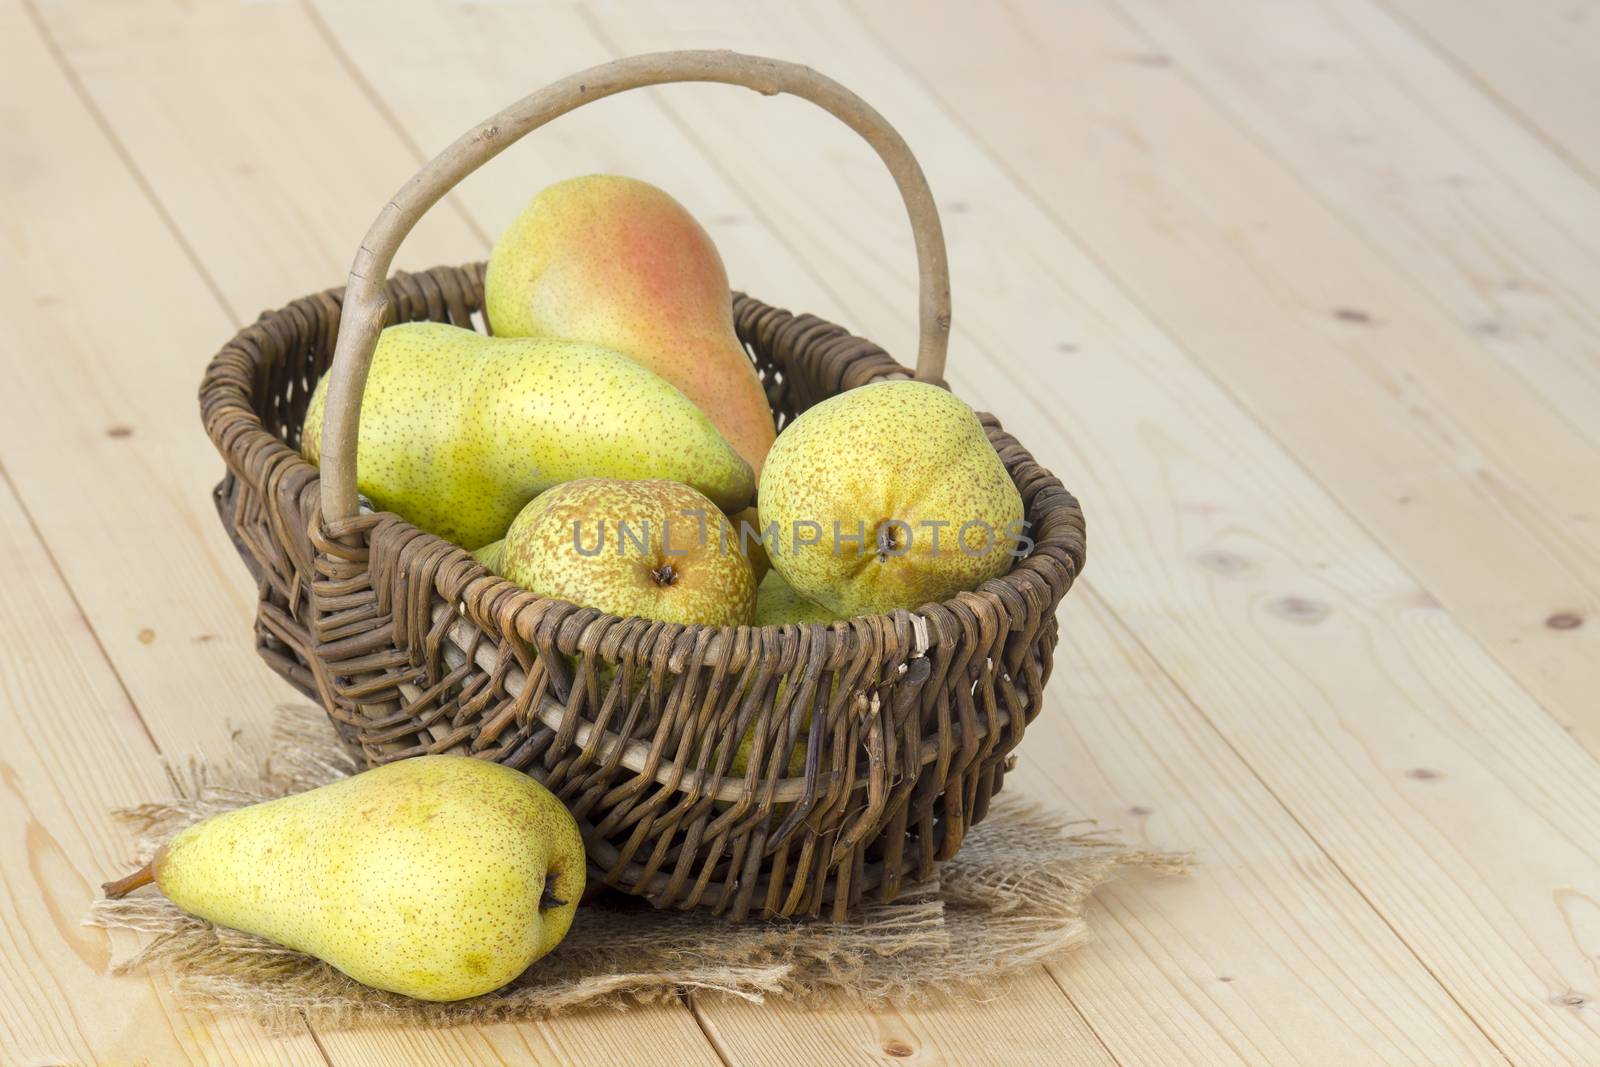 Juicy fresh pears in a basket by miradrozdowski